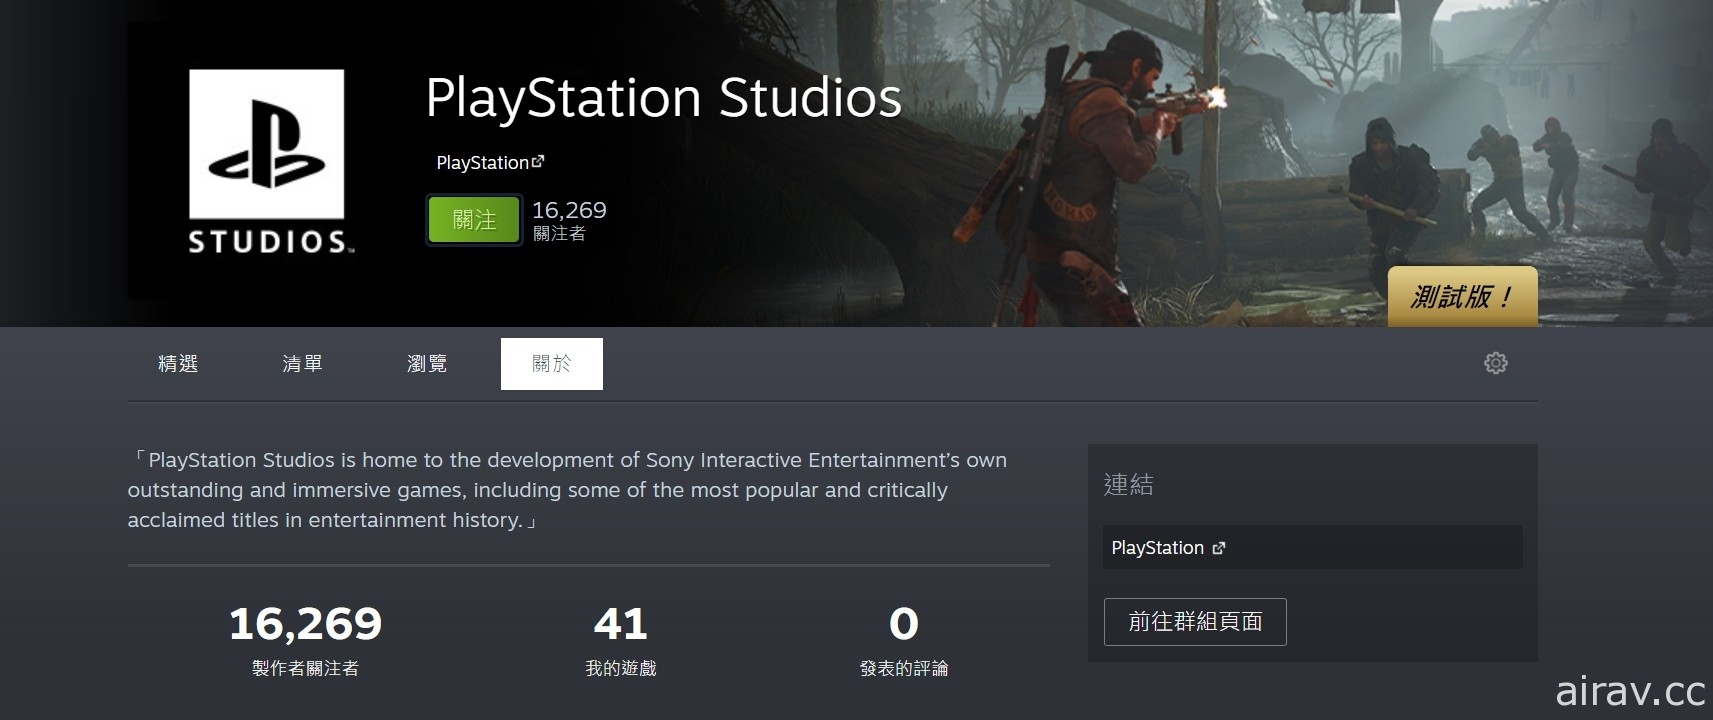 PlayStation Studios 开设 Steam 品牌商店页面 持续耕耘 PC 游戏市场